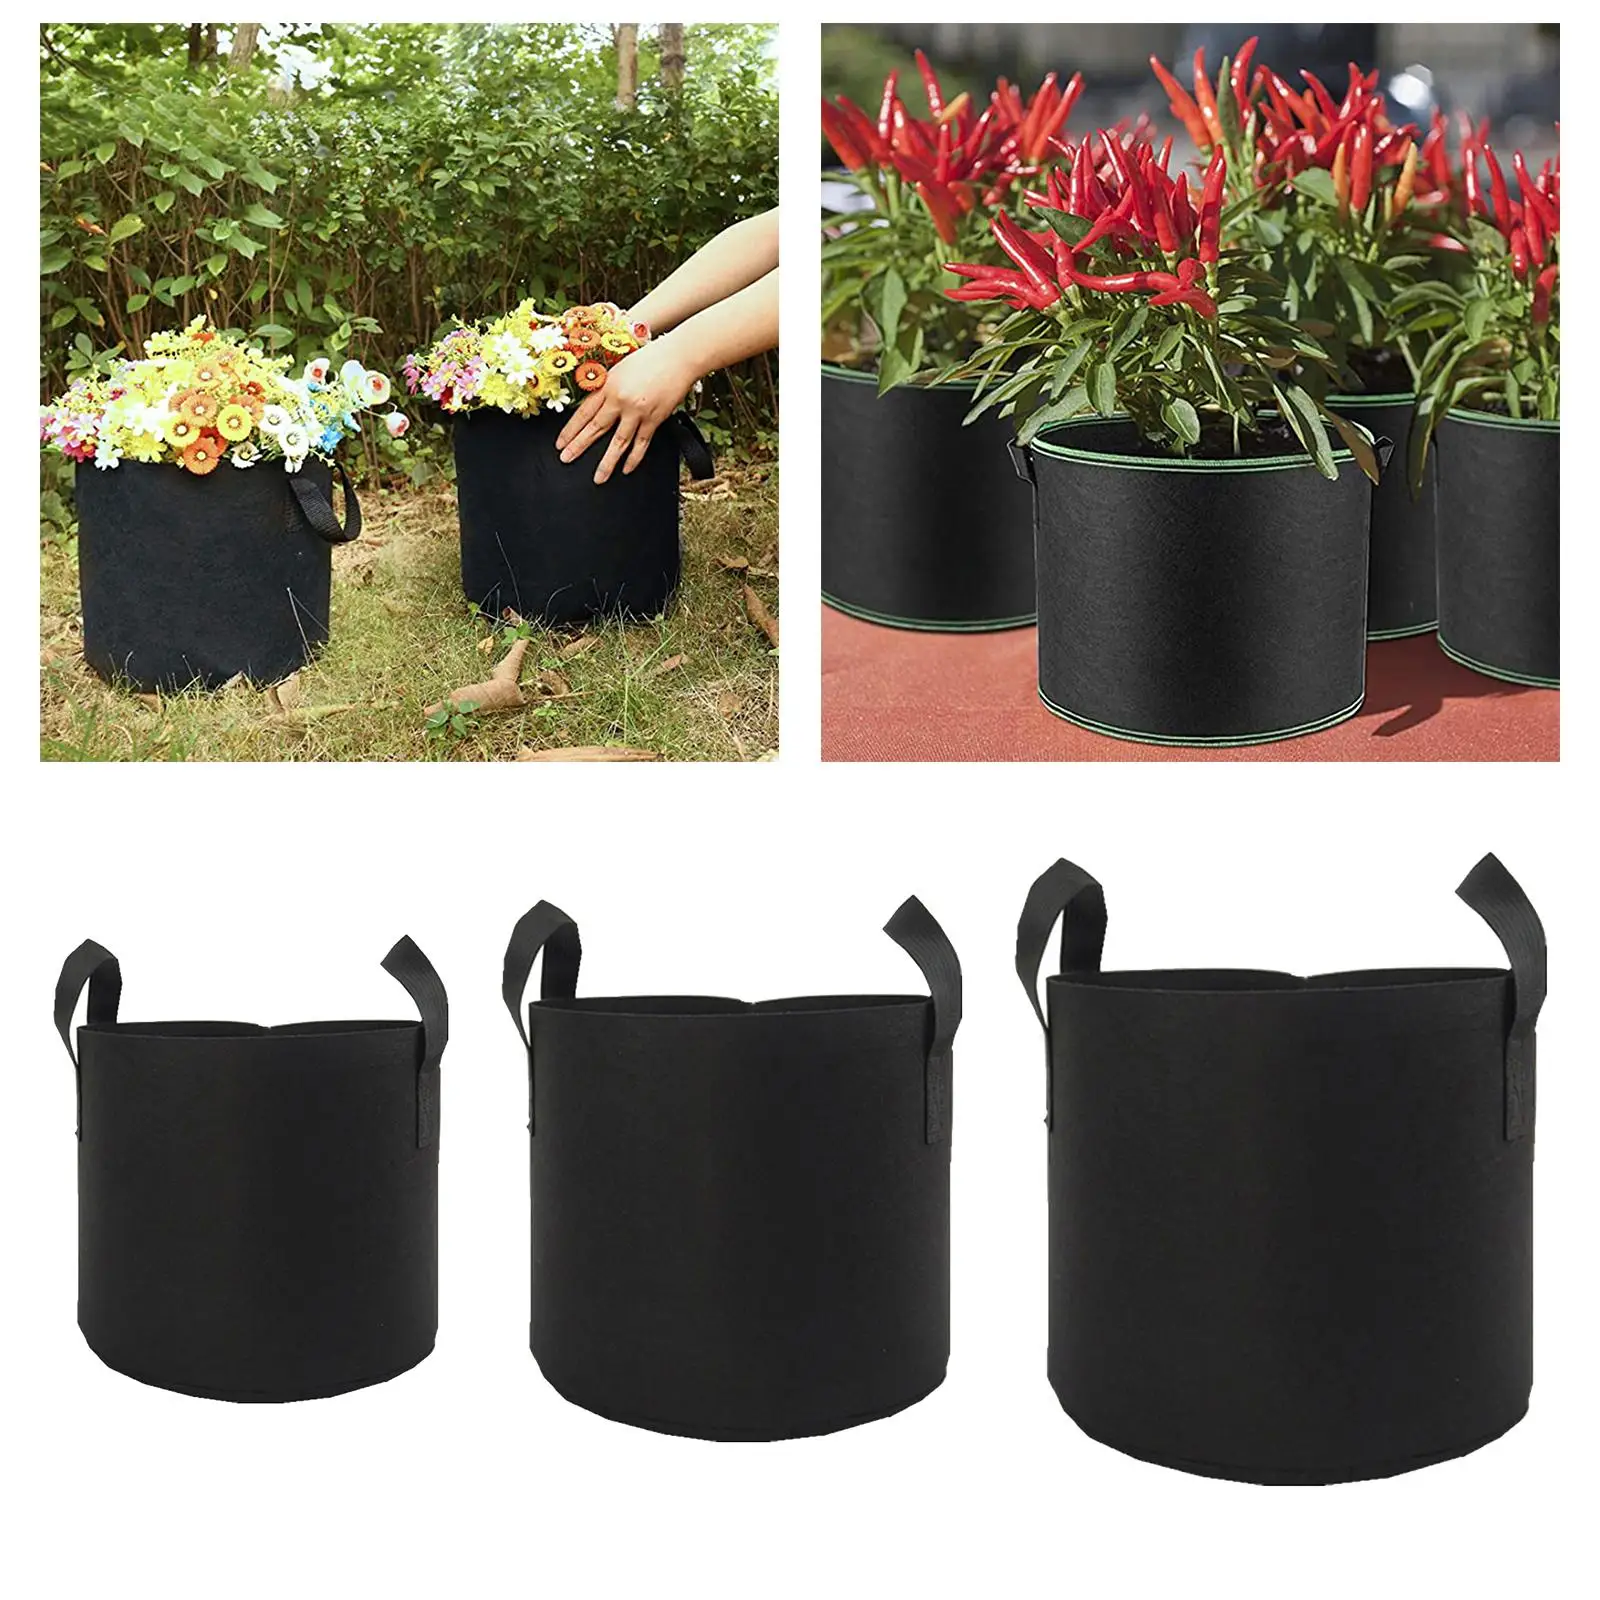 1x  Garden Heavy Duty Non-Woven Aeration Plant Fabric Pot Container